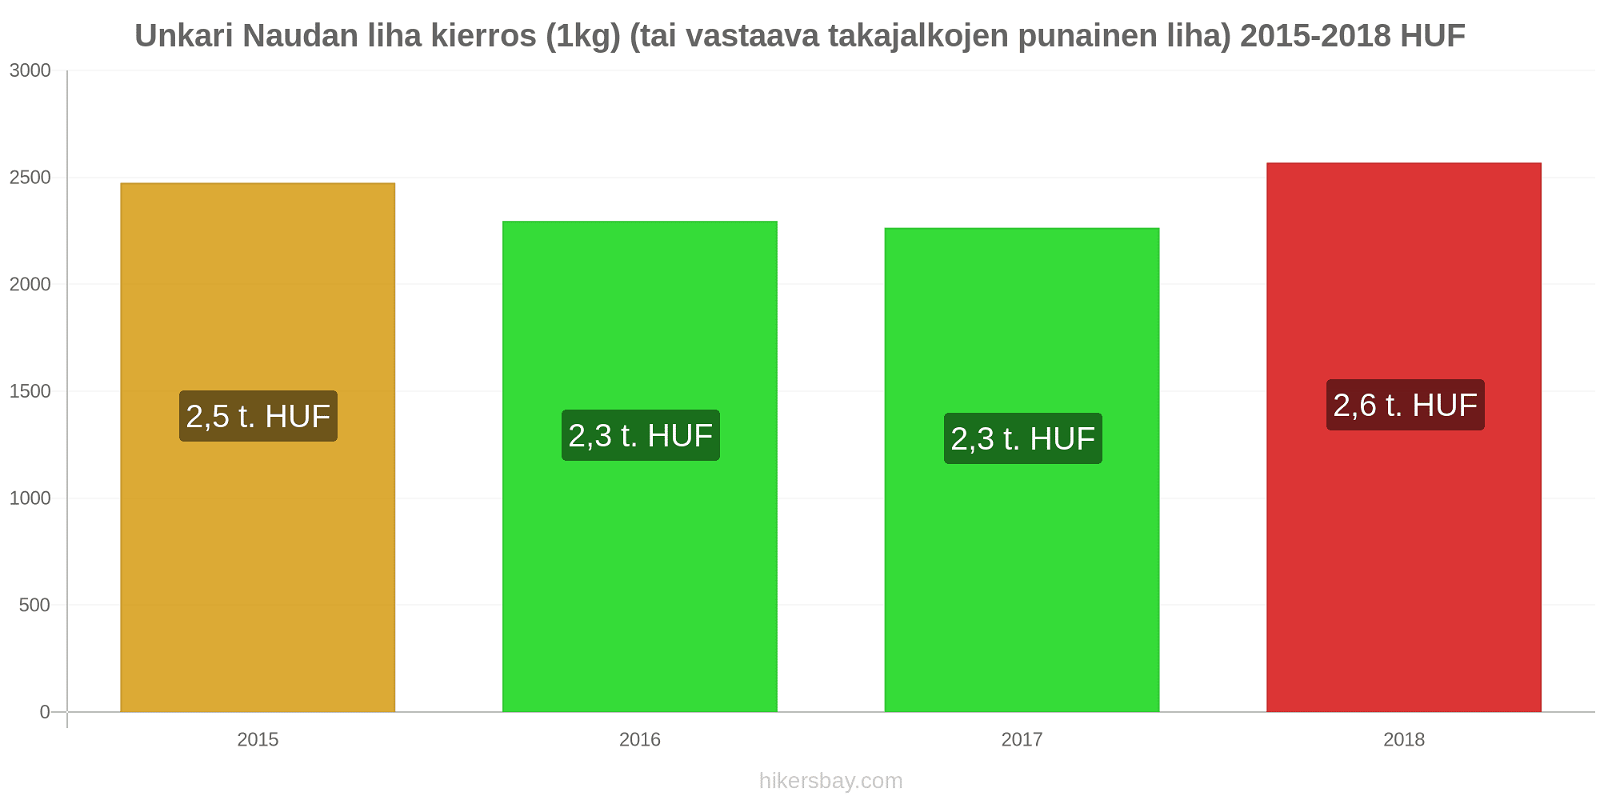 Unkari hintojen muutokset Naudanliha (1kg) (tai vastaava punainen liha) hikersbay.com